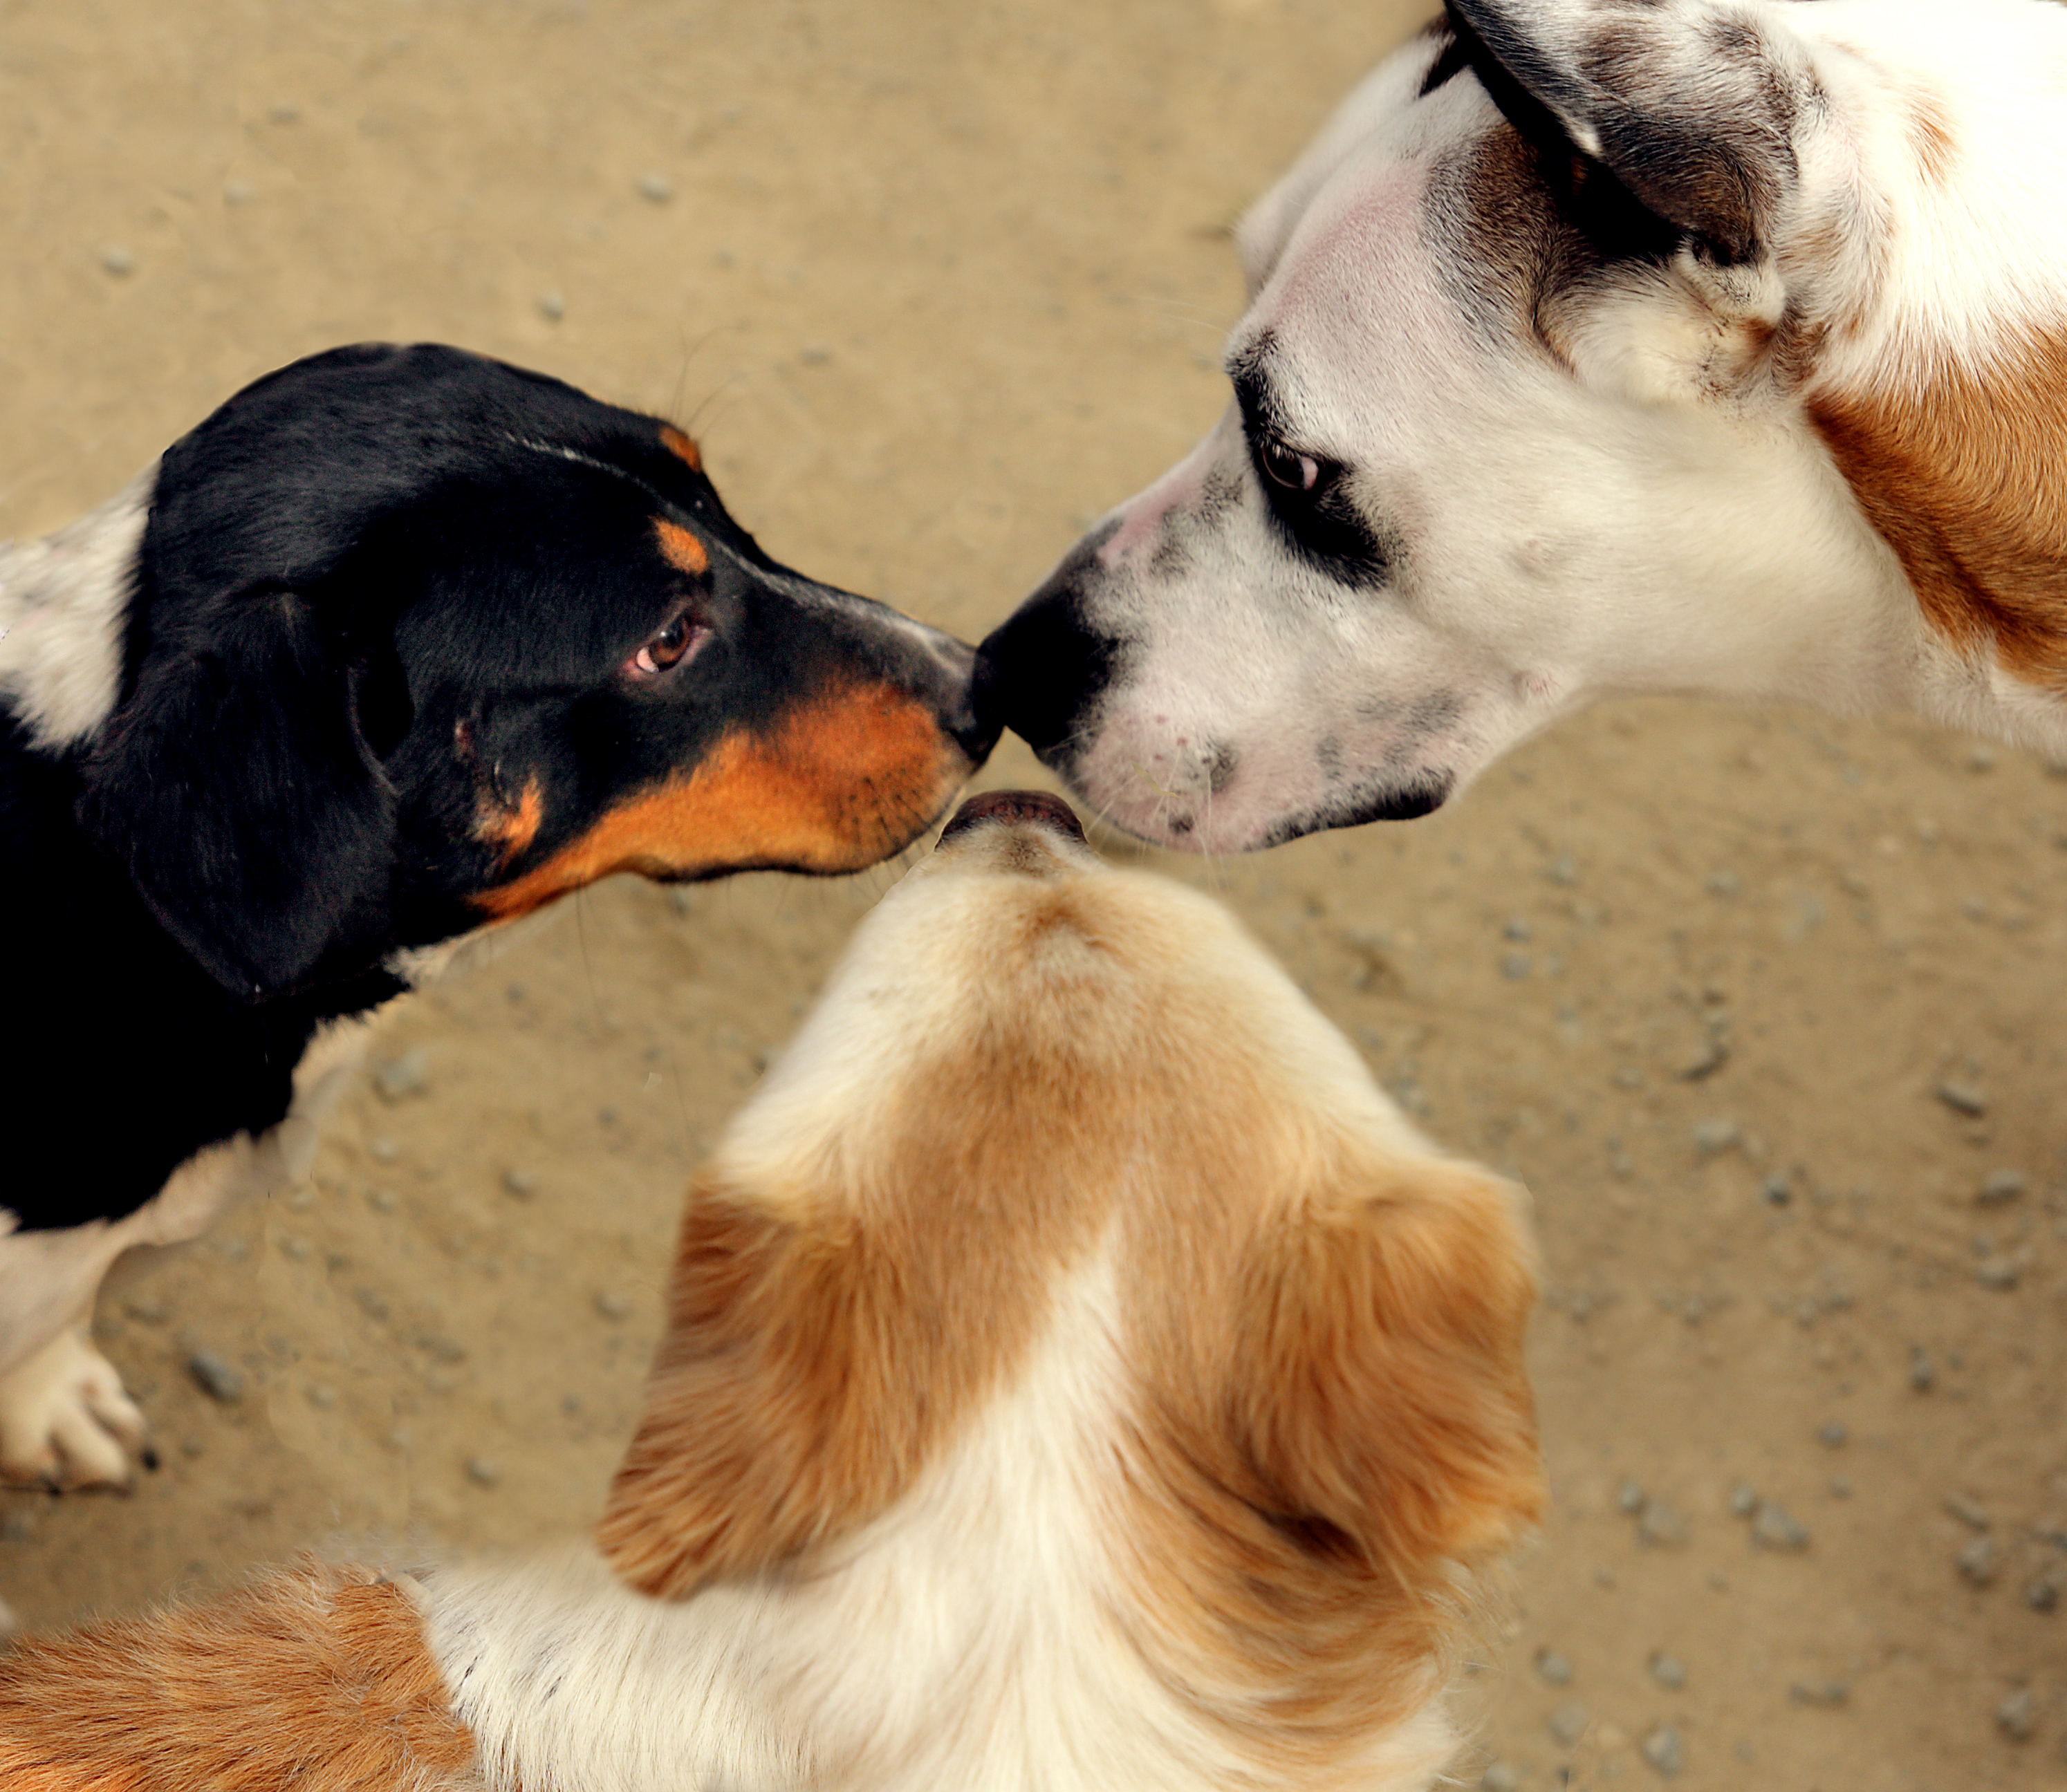 Animal communication